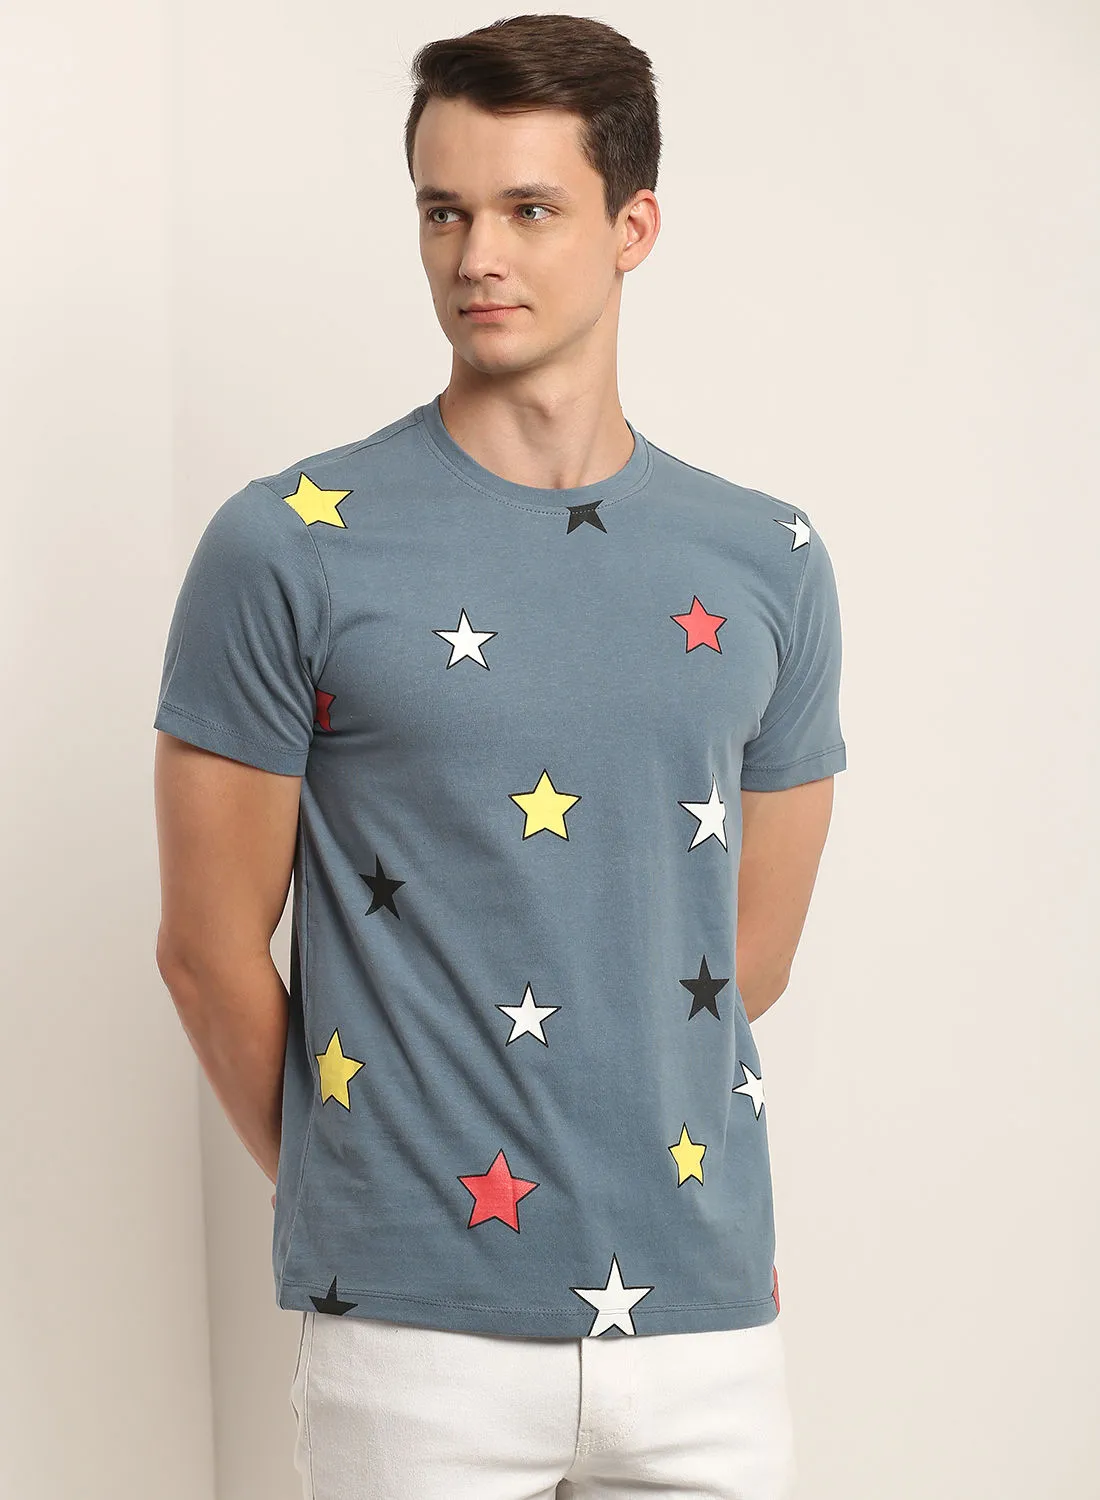 QUWA Men casual slim fit all over stars printed T-shirt Blue